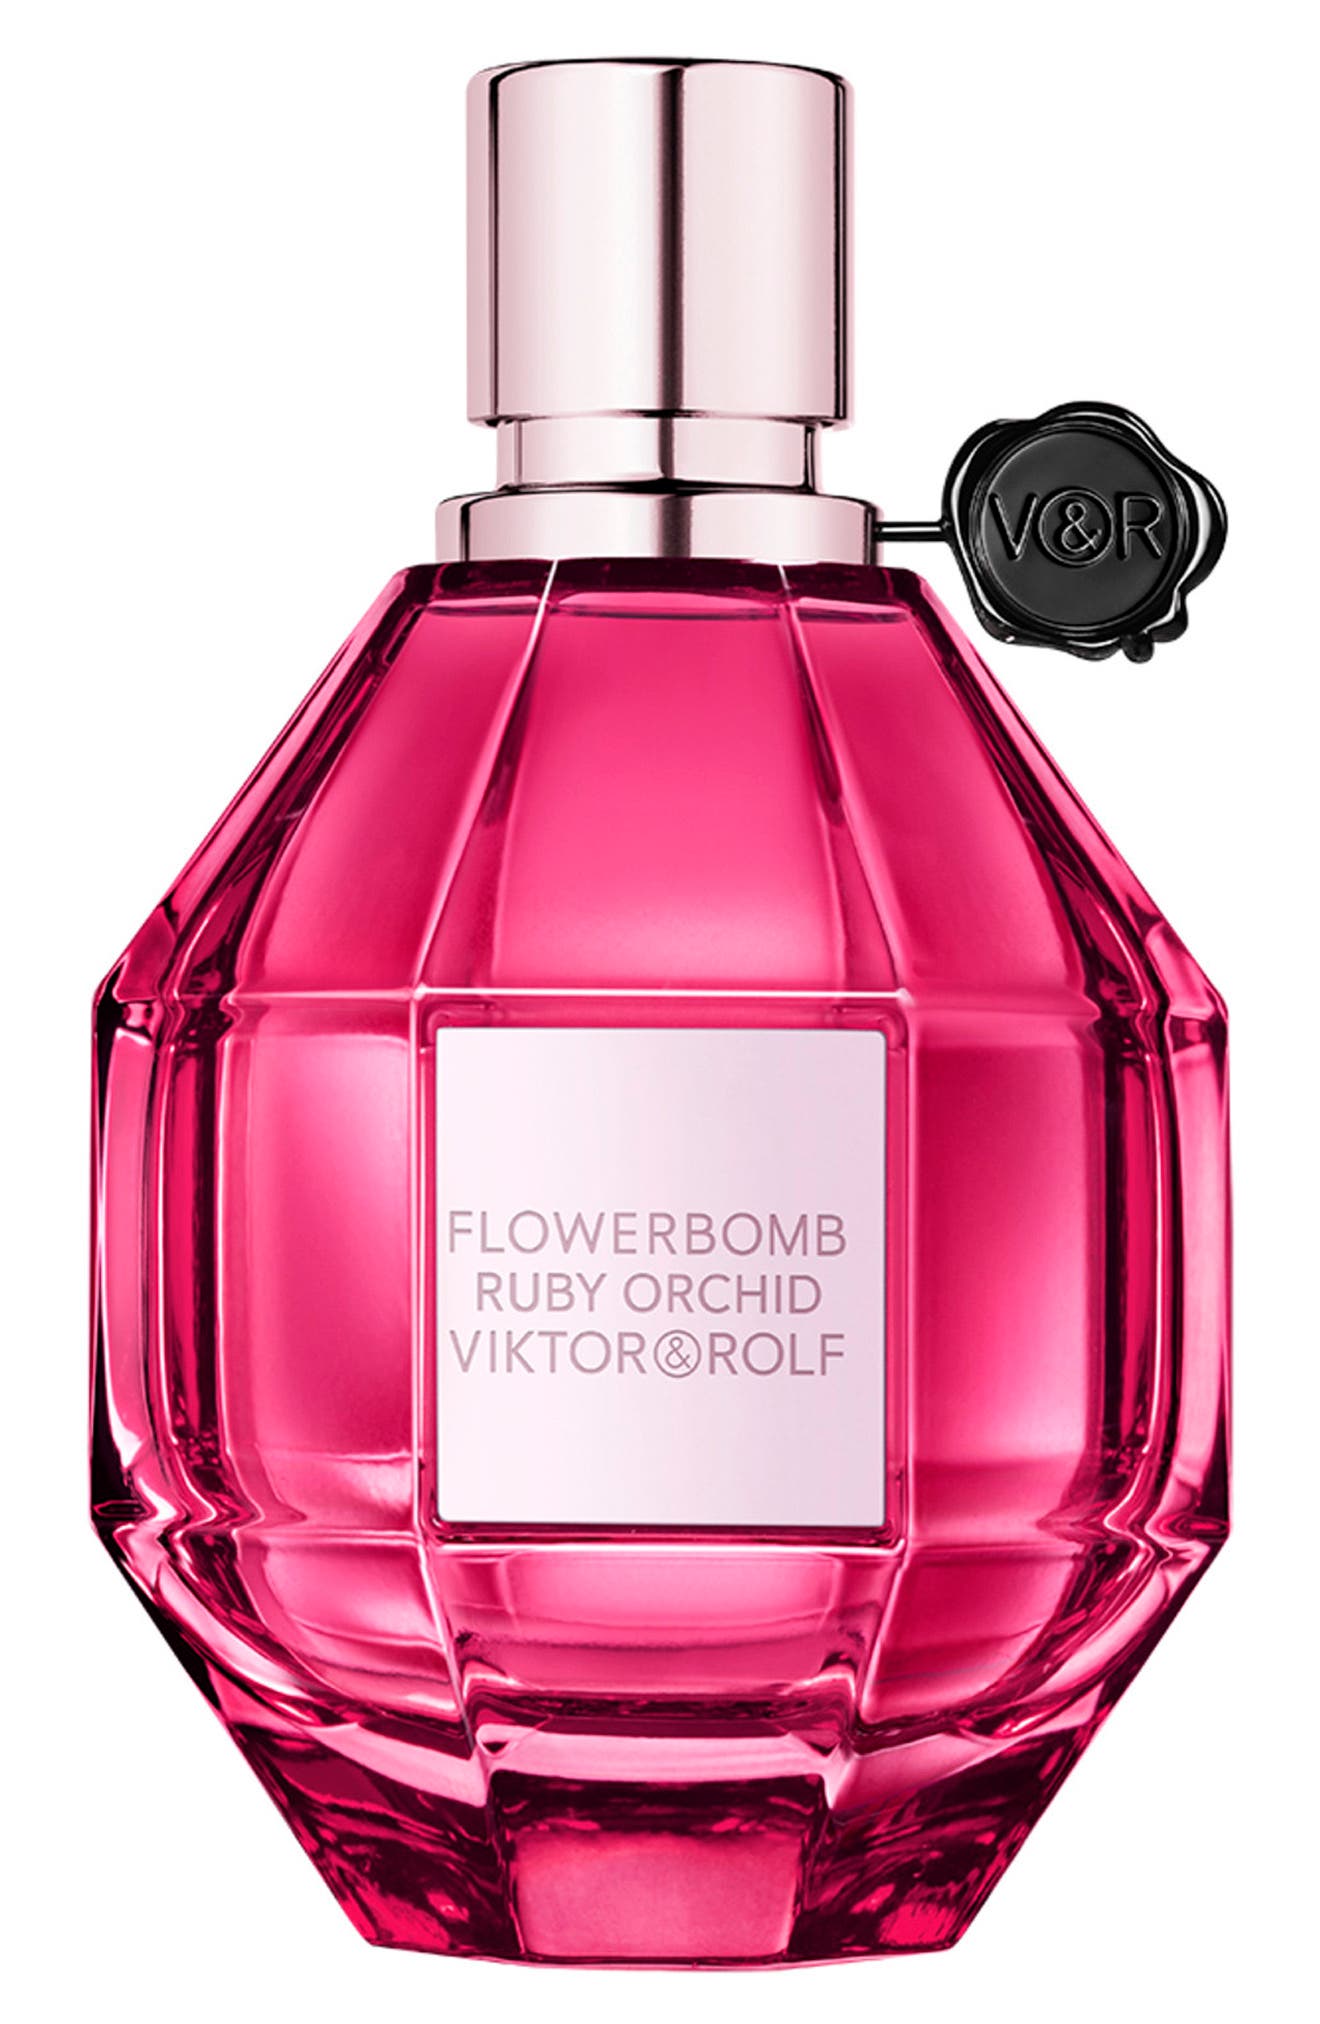 Viktor & Rolf Flowerbomb Ruby Orchid Eau de Parfum at Nordstrom, Size 1 Oz